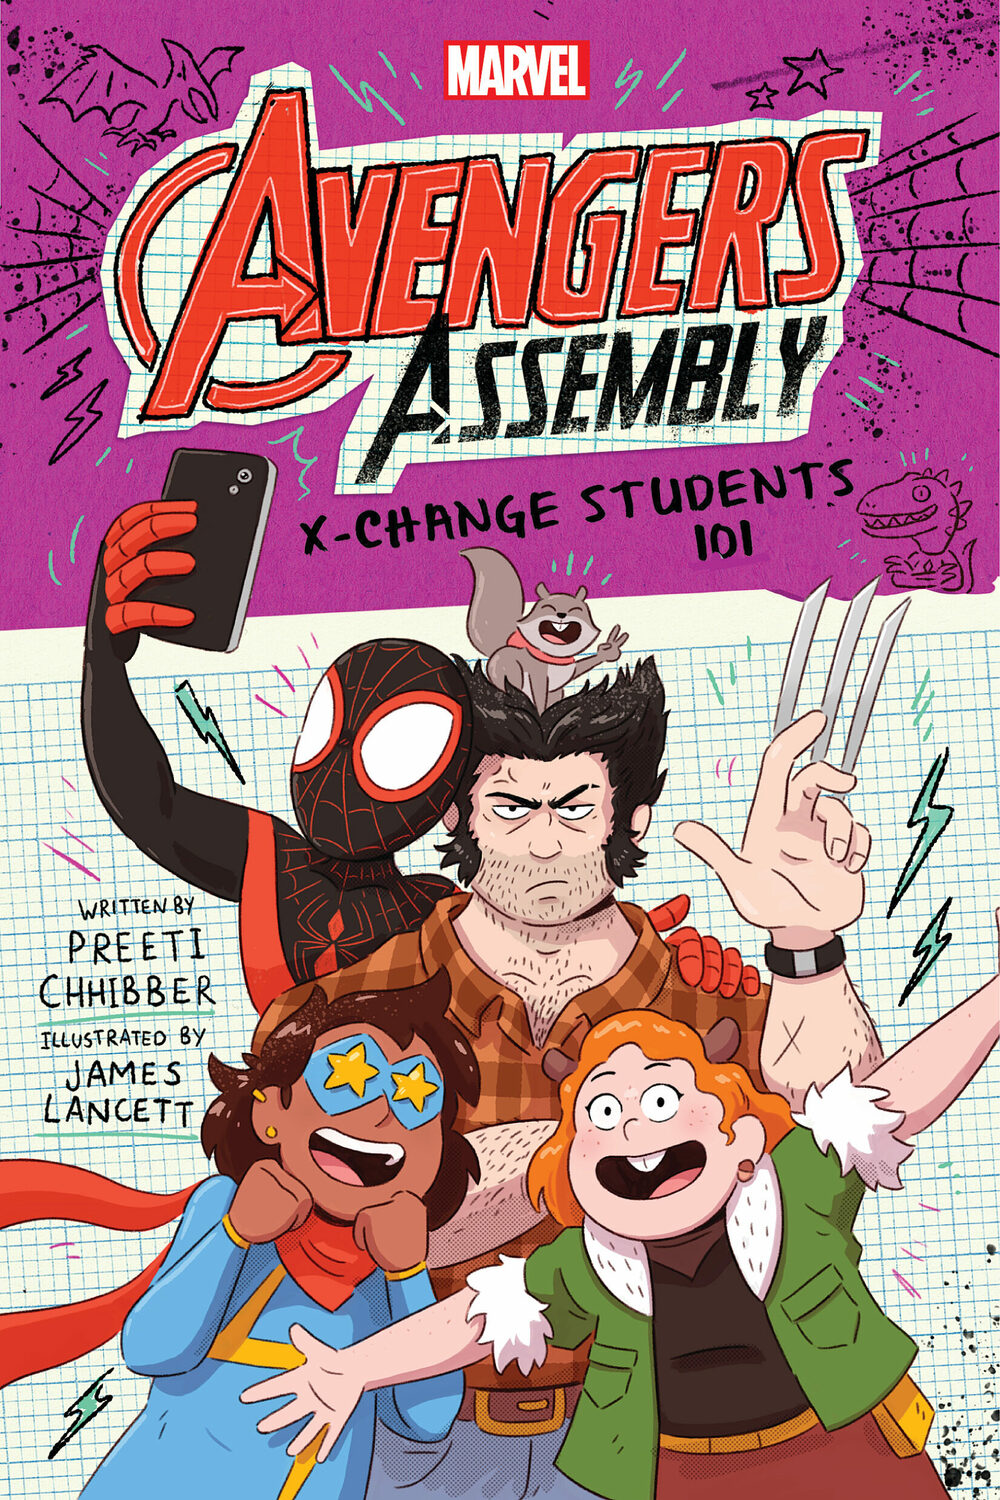 X-Change Students 101 (Marvel Avengers Assembly 